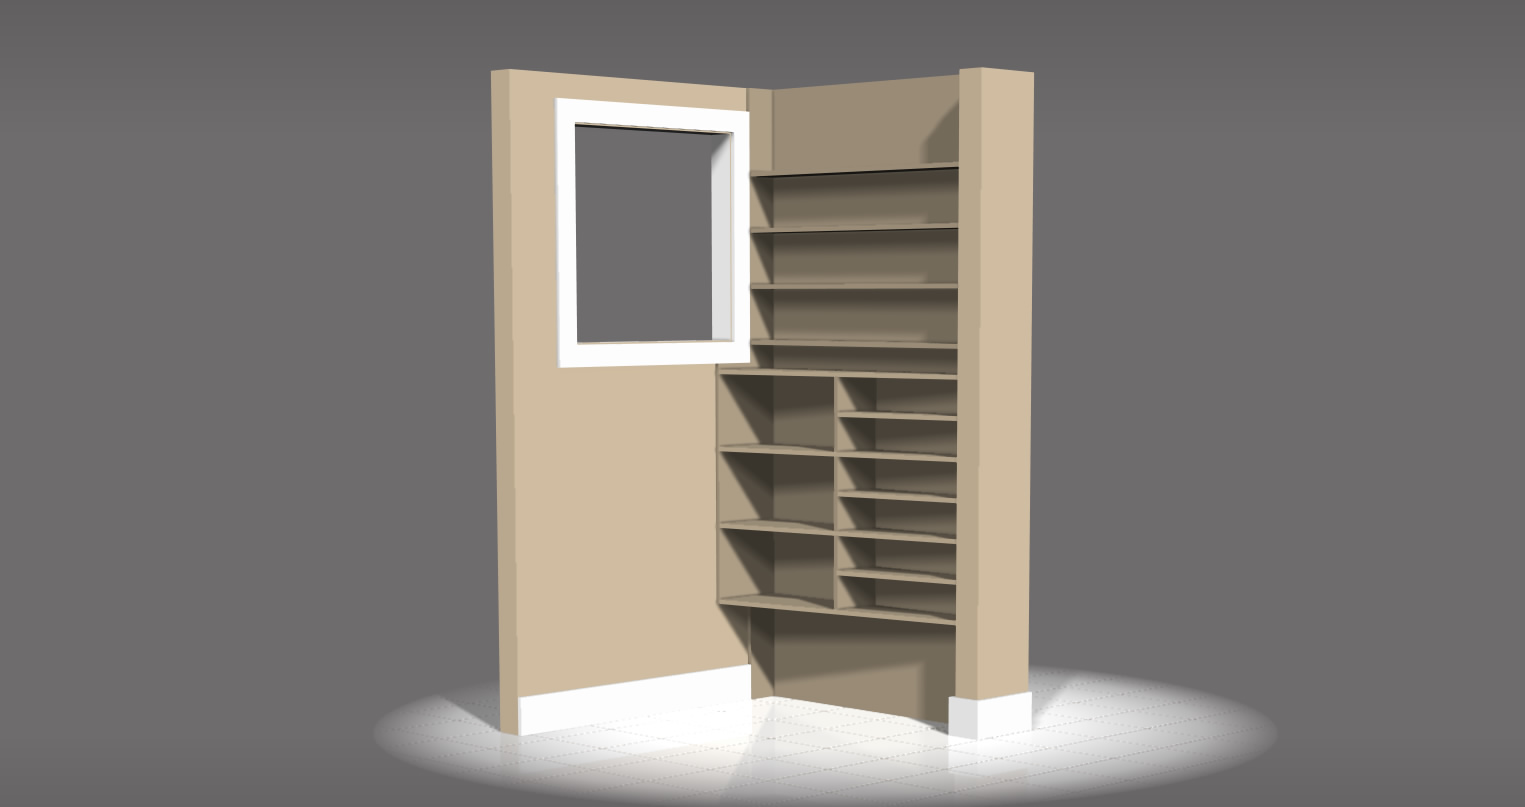 Woodworking bookshelf design in malaysia PDF Free Download